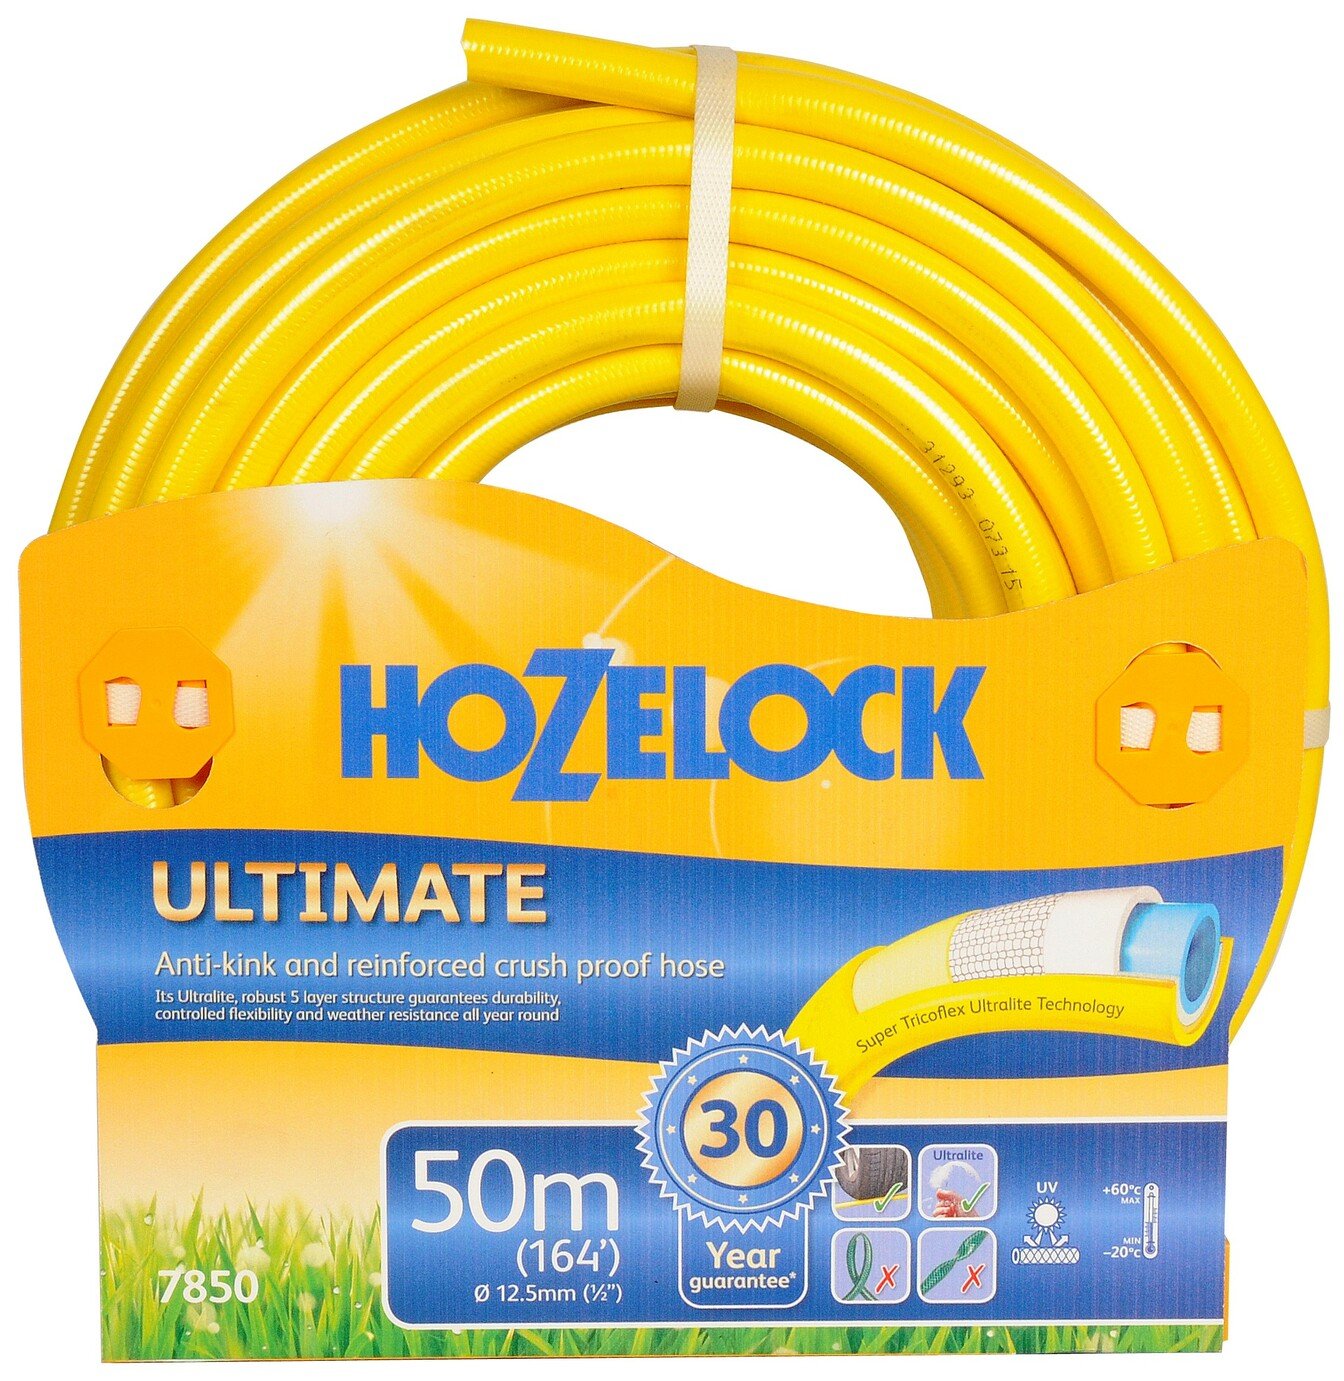 Hozelock 50m Ultimate Hose.